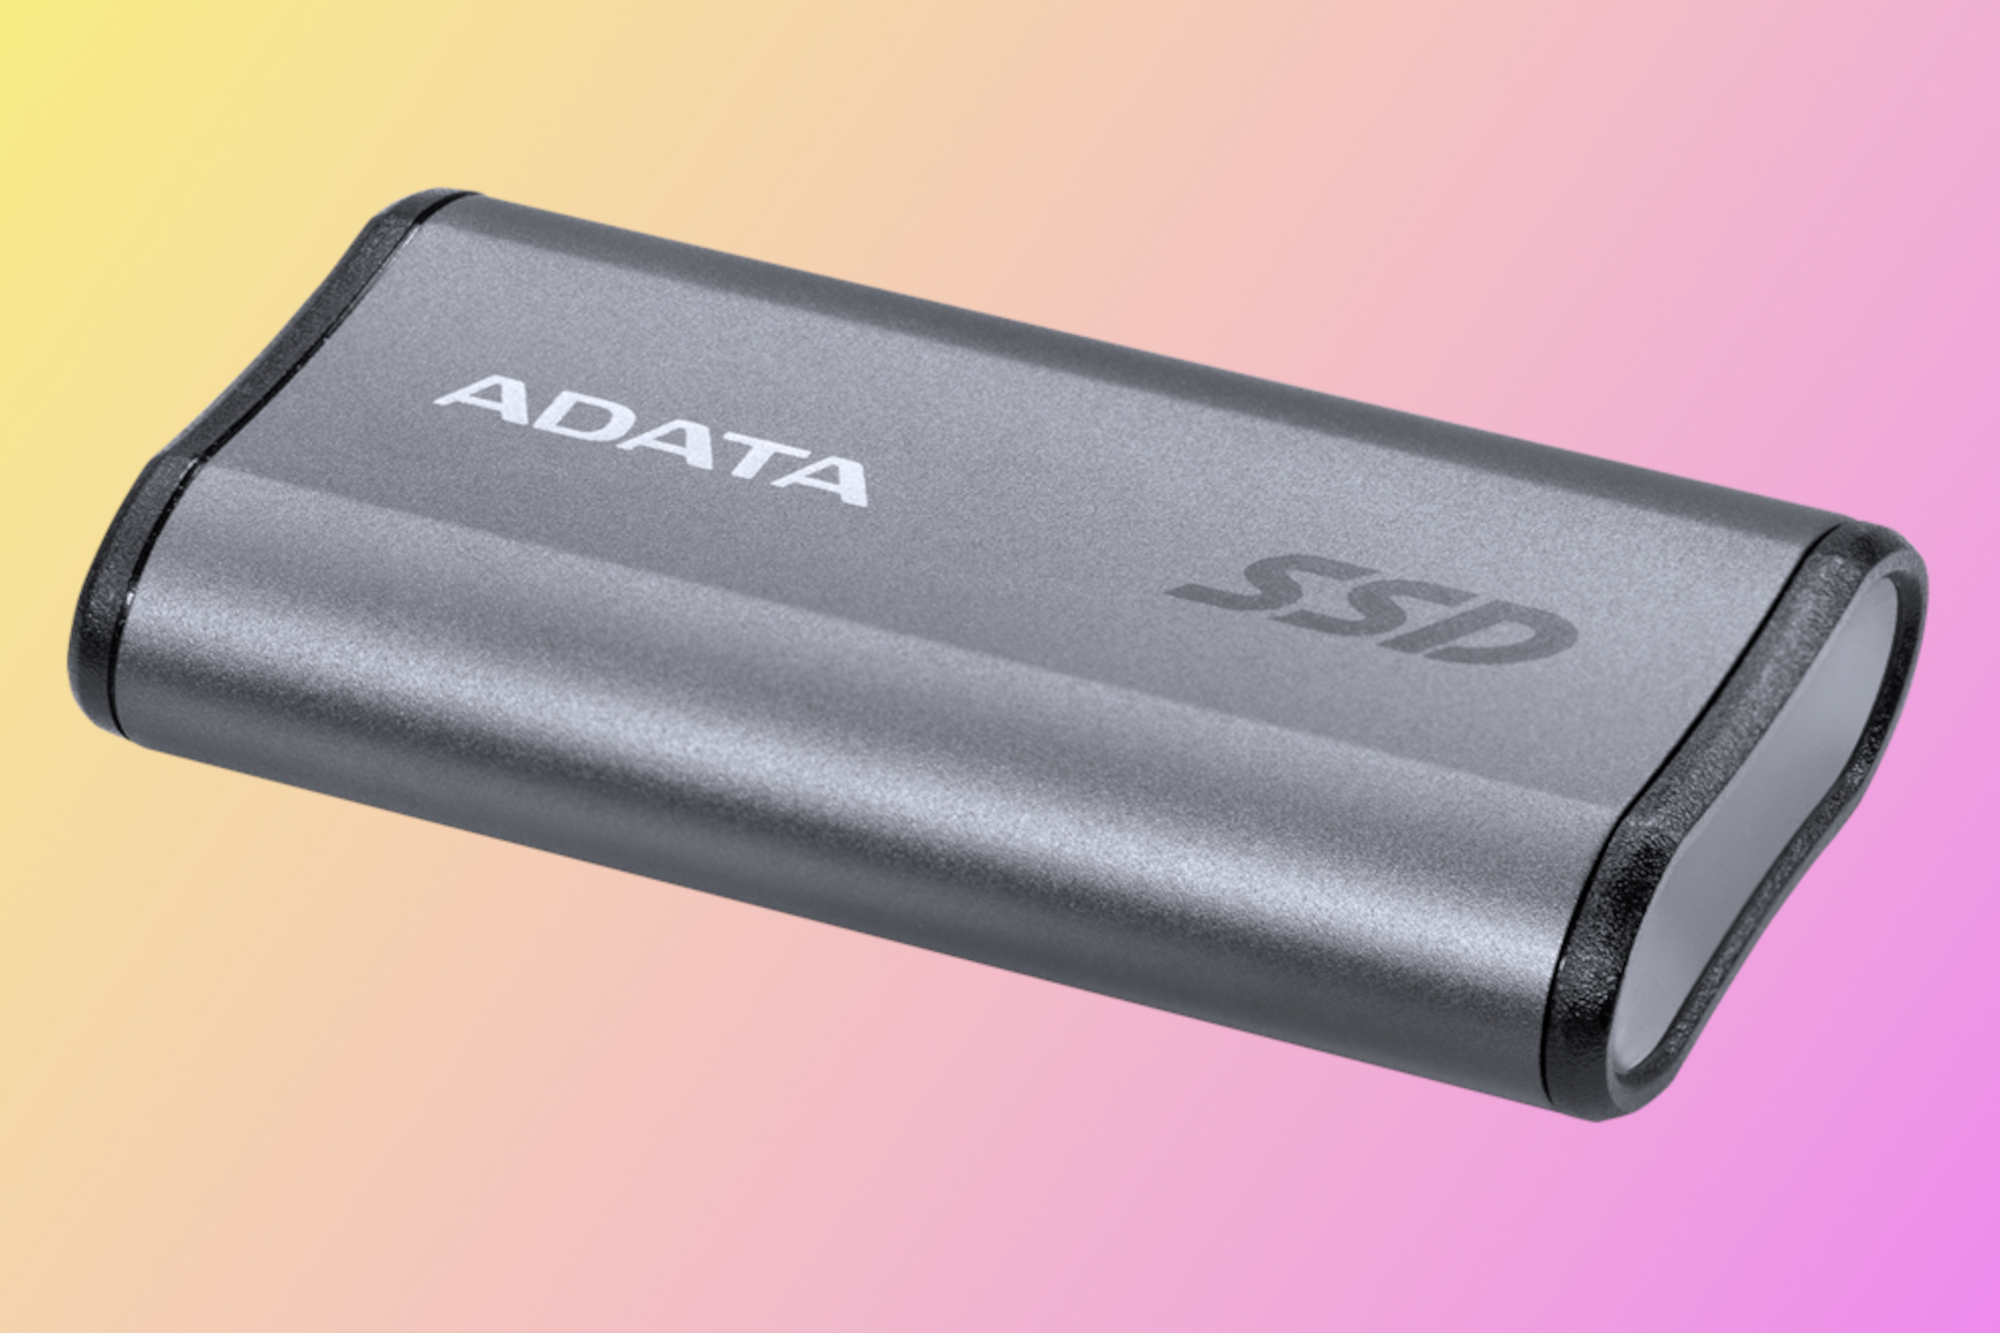 Adata Elite SE880 SSD - Most portable SSD